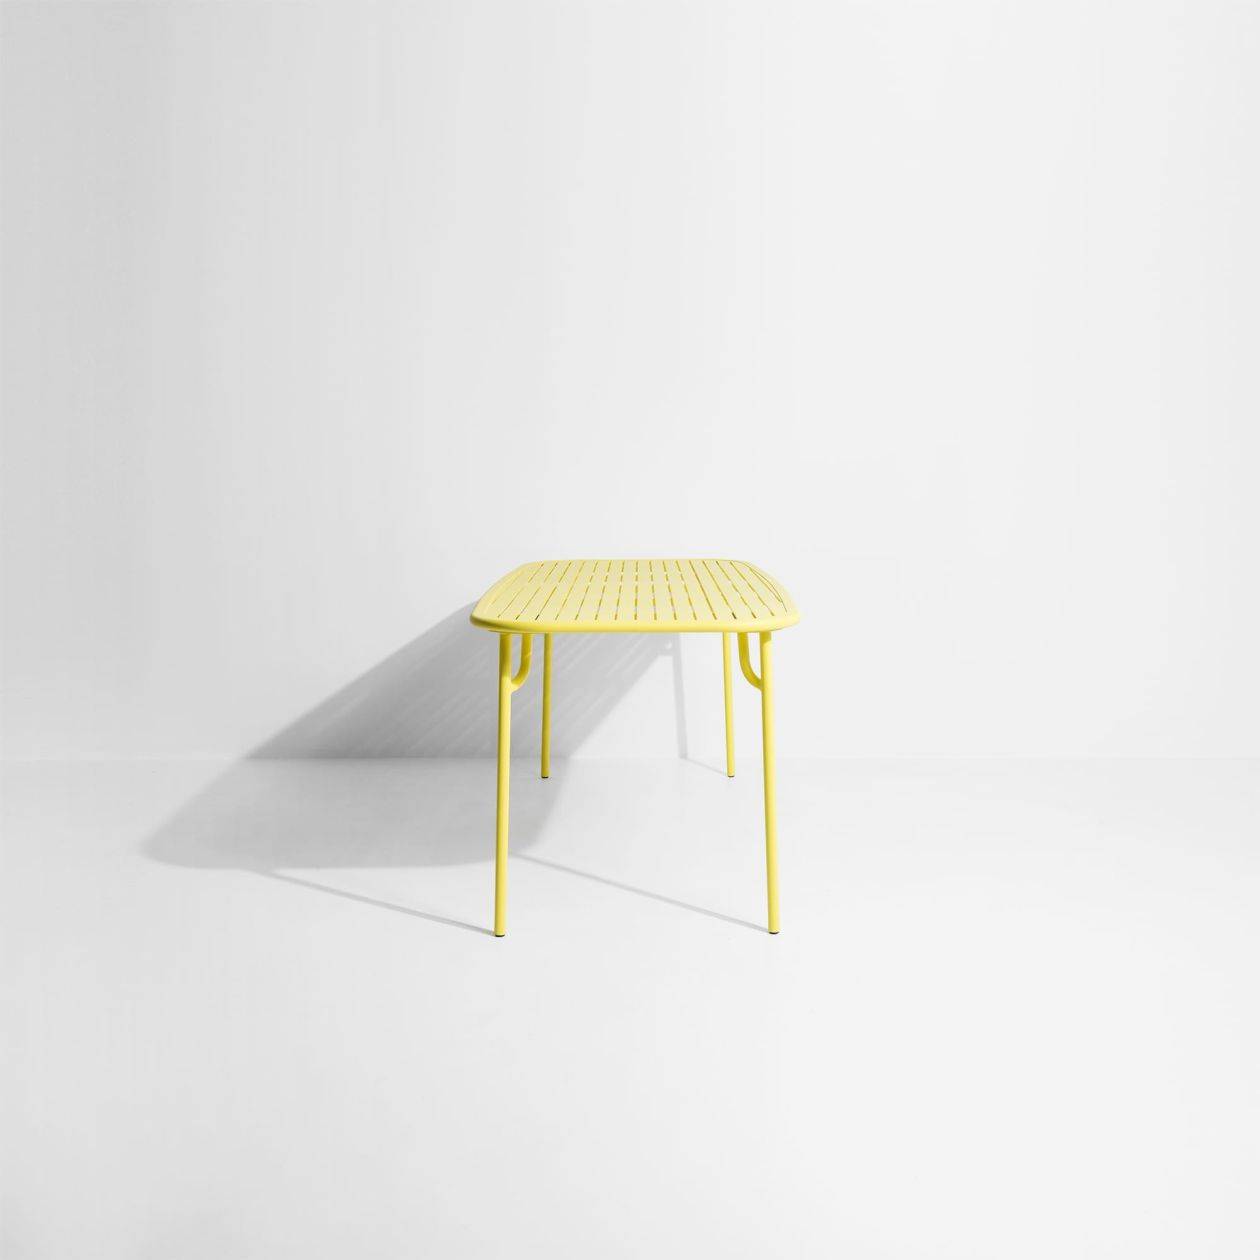 Week-End Medium Rectangular Dining Table with slats - Yellow